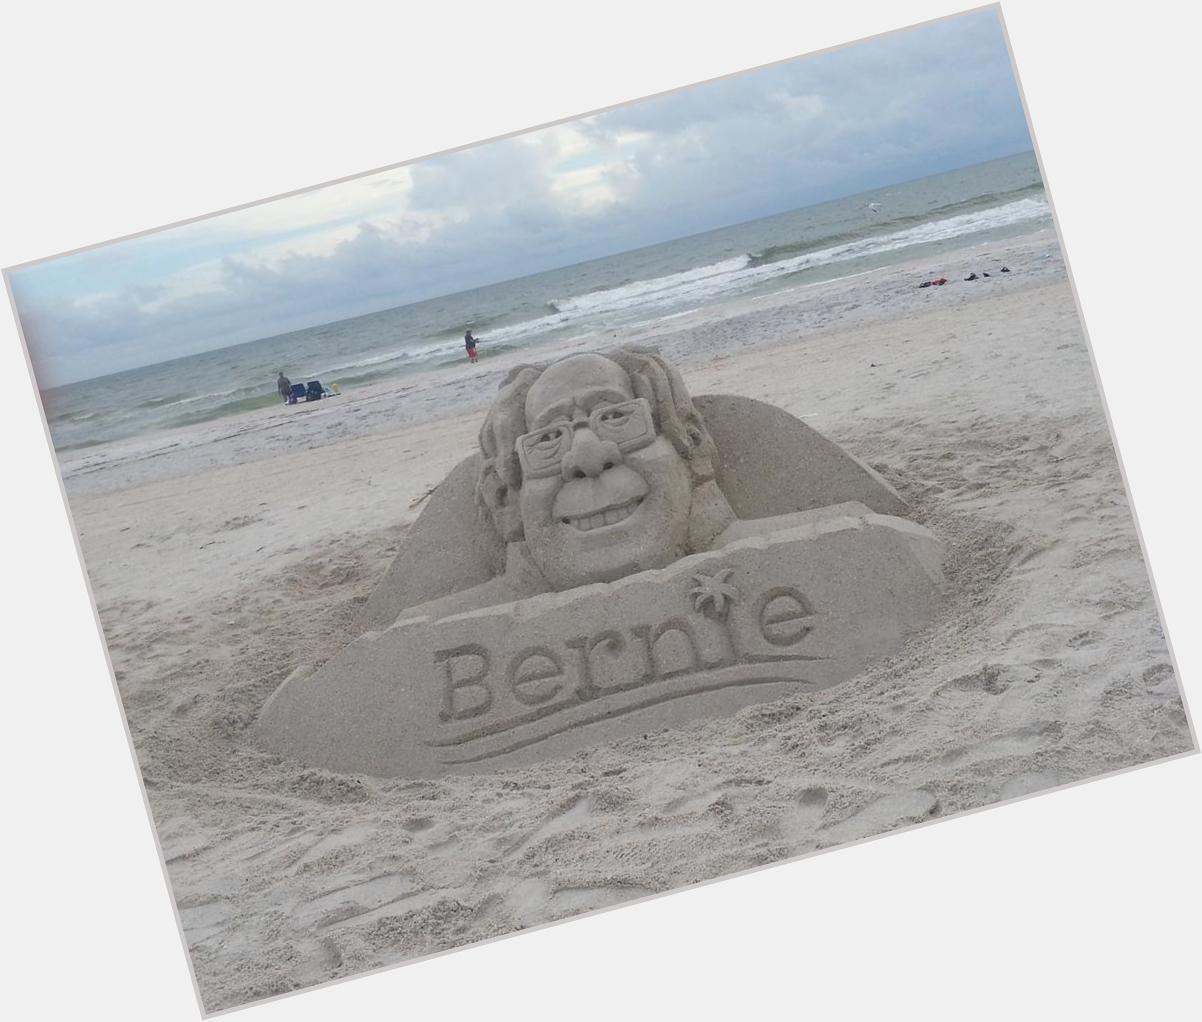 Florida says happy birthday to Bernie Sanders.  